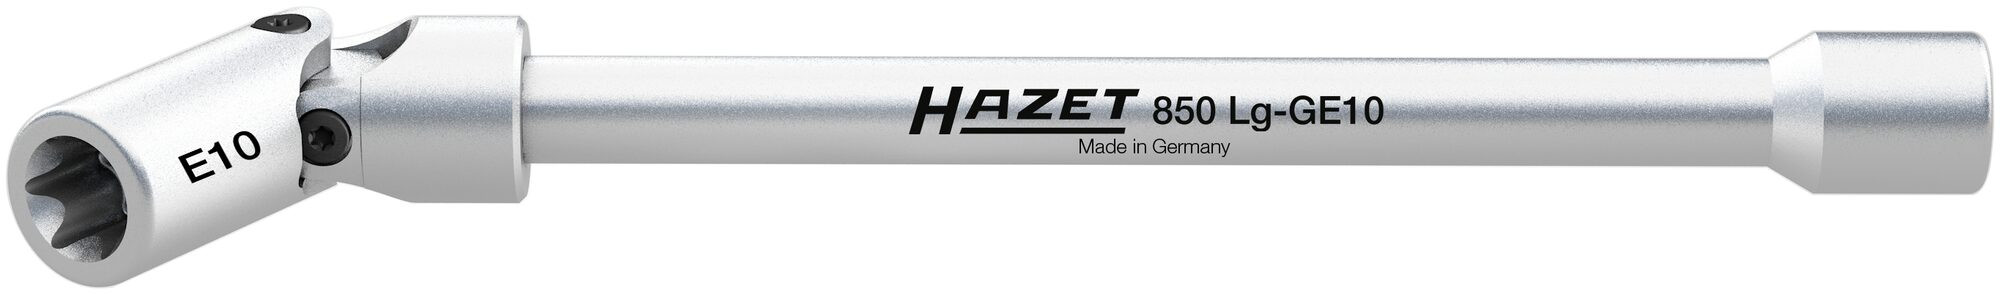 Se HAZET Torx lednøgle 1/4 E10 150 mm (850LG-GE10) hos BLITE